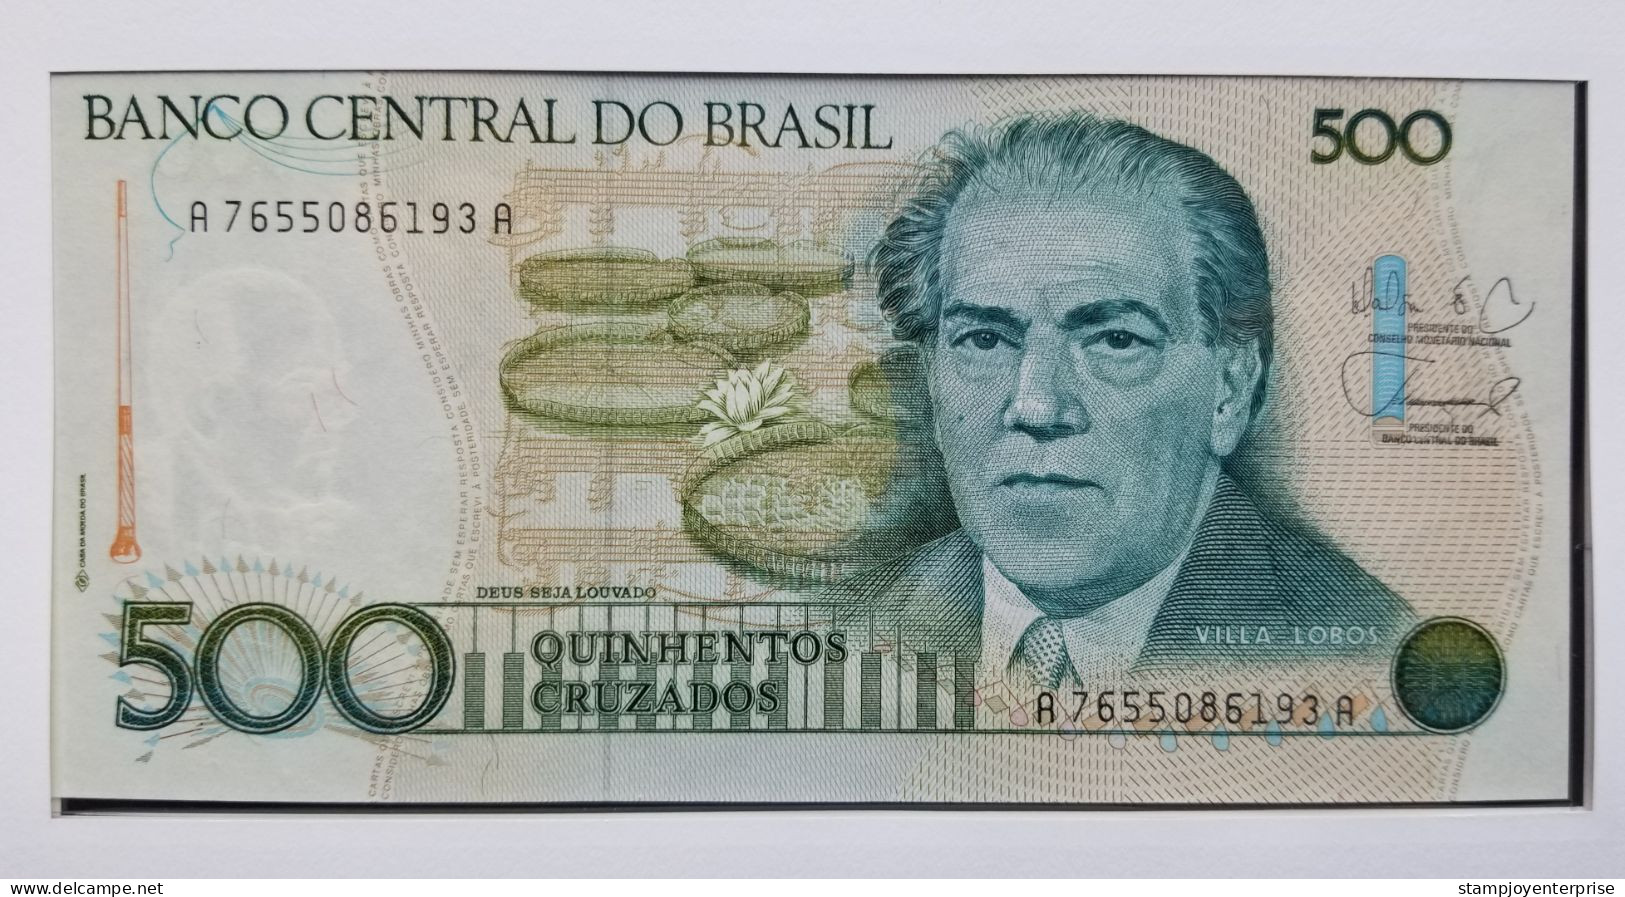 Brazil Heitor Villa-Lobos Birth Centenary 1988 Musical Instruments Music FDC (banknote Cover) *rare - Briefe U. Dokumente